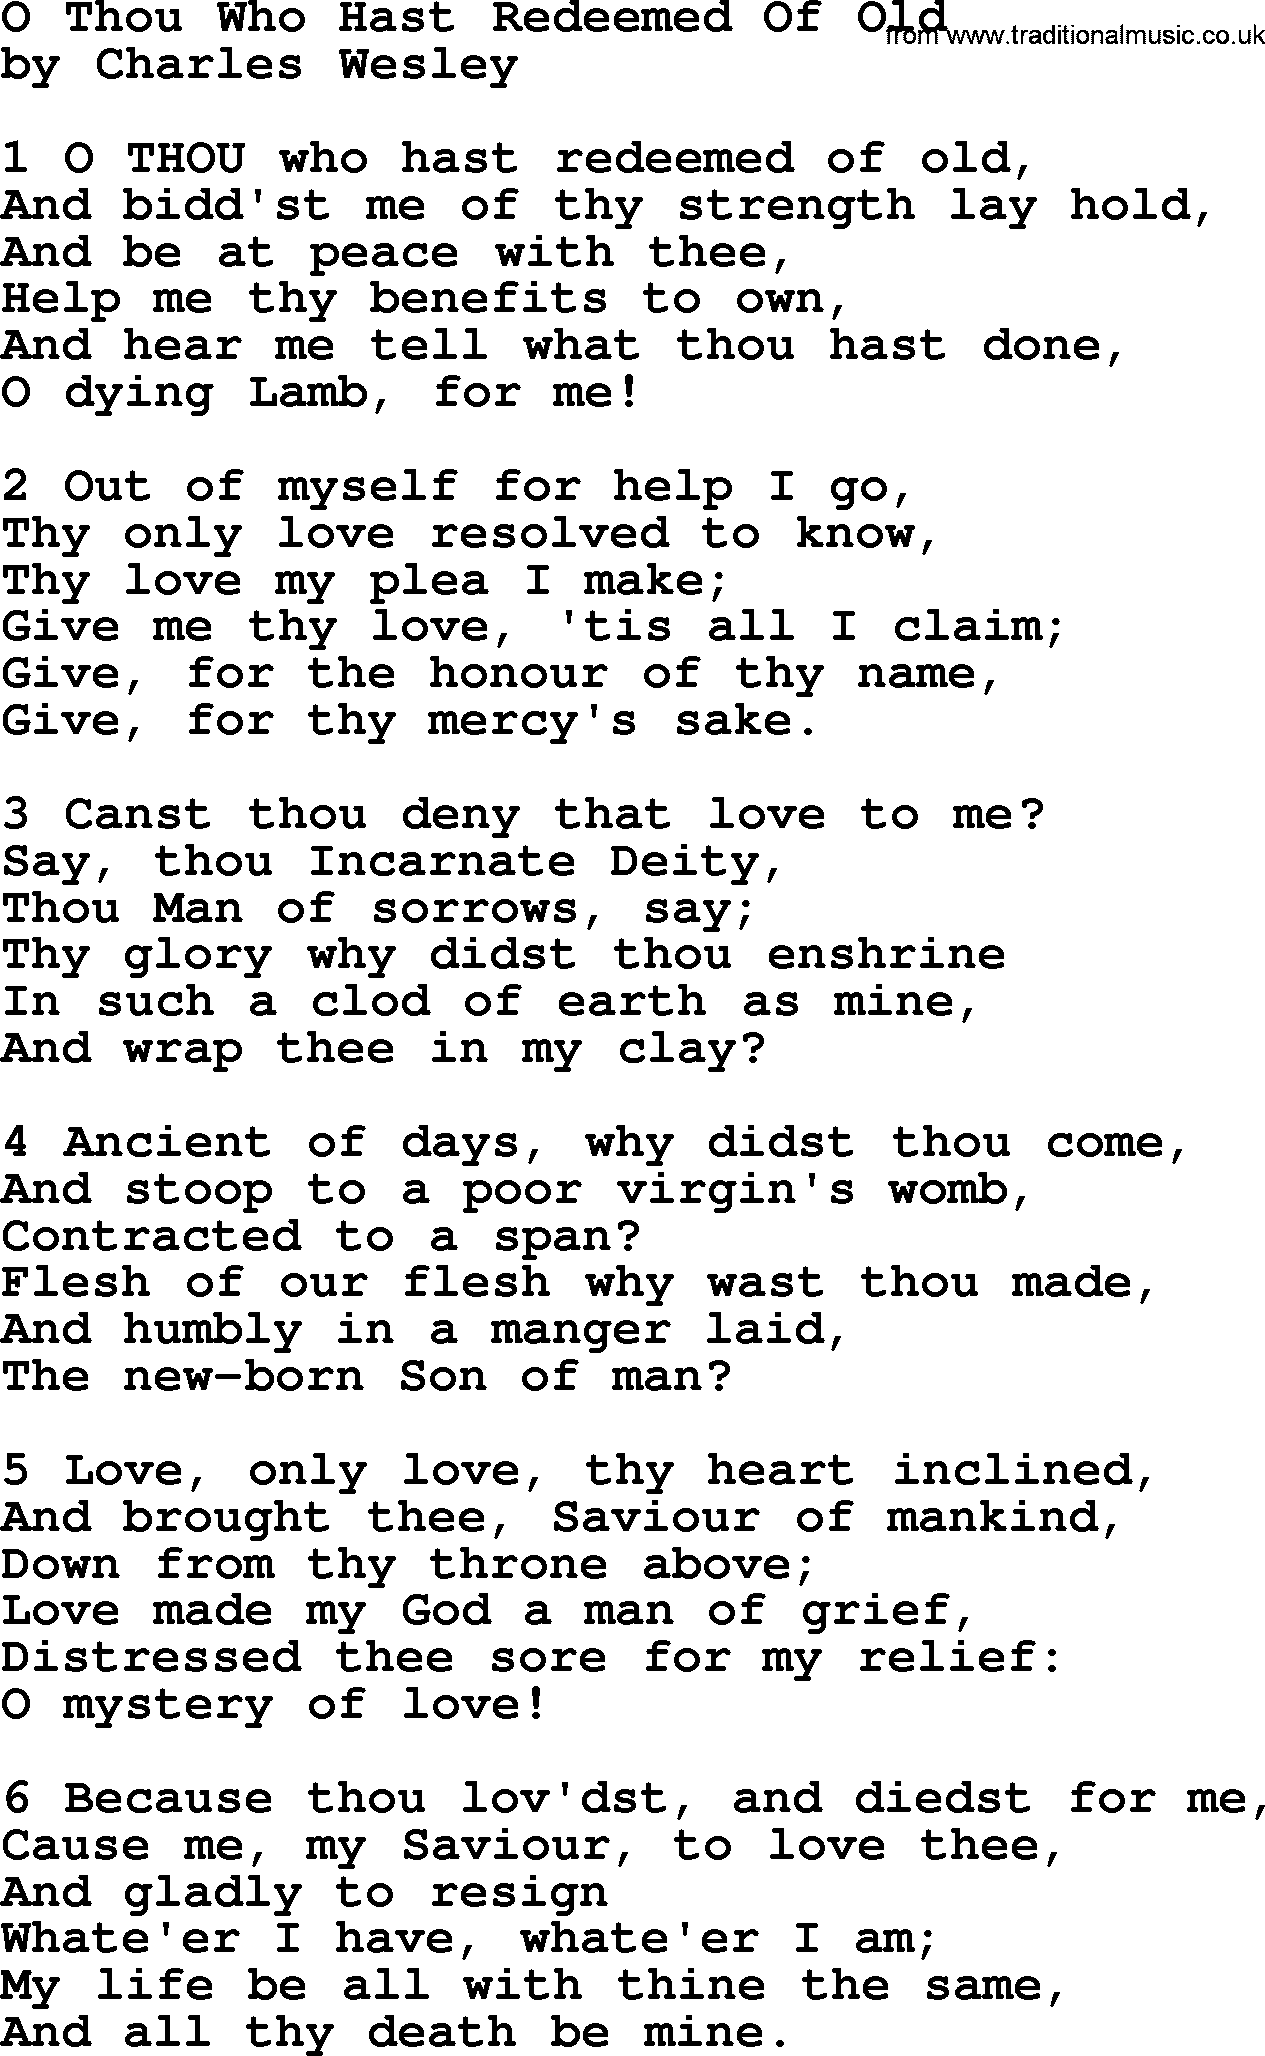 Charles Wesley hymn: O Thou Who Hast Redeemed Of Old, lyrics